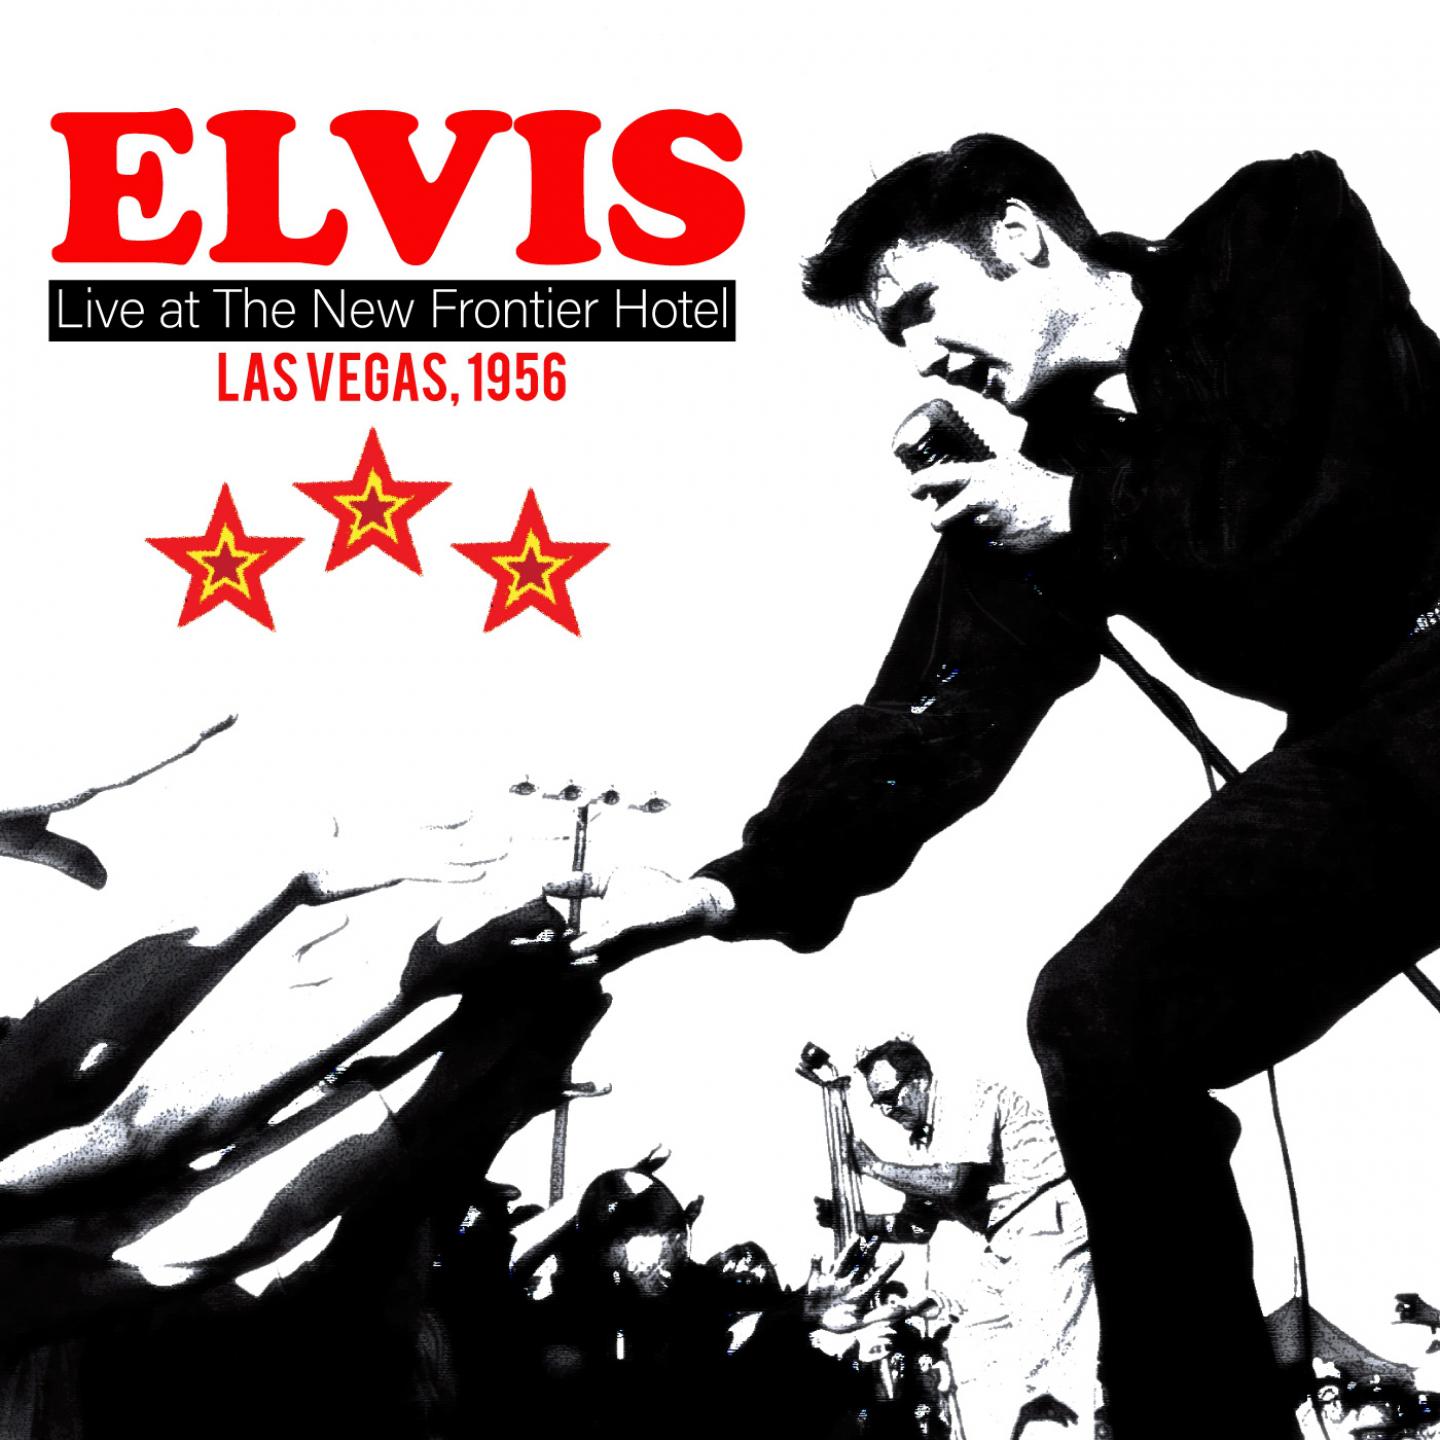 Elvis Presley (On Stage)专辑